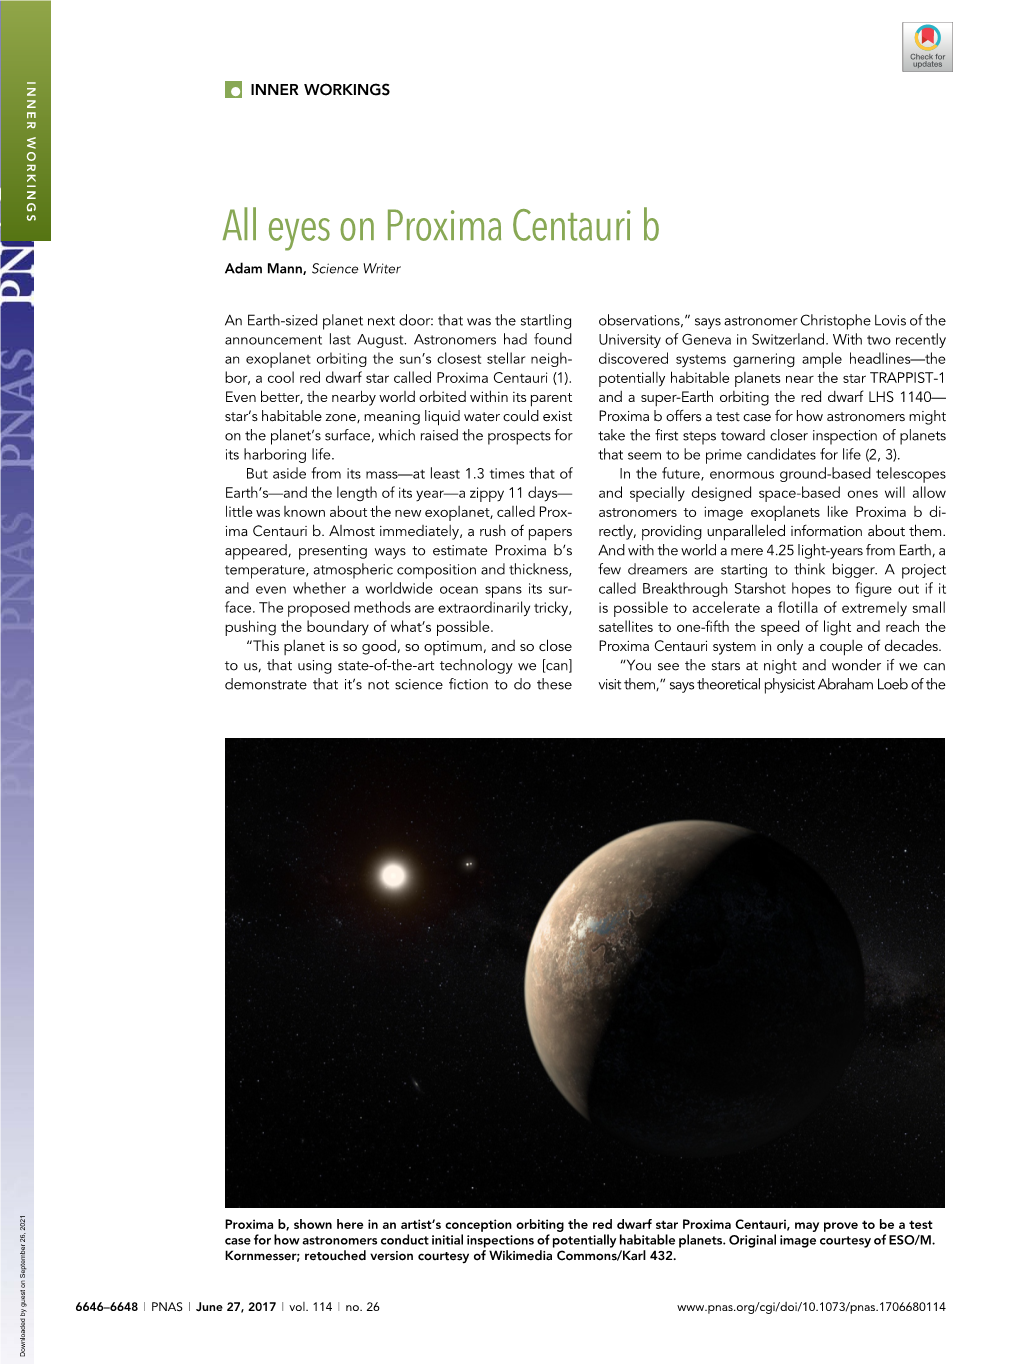 Eyes on Proxima Centauri B